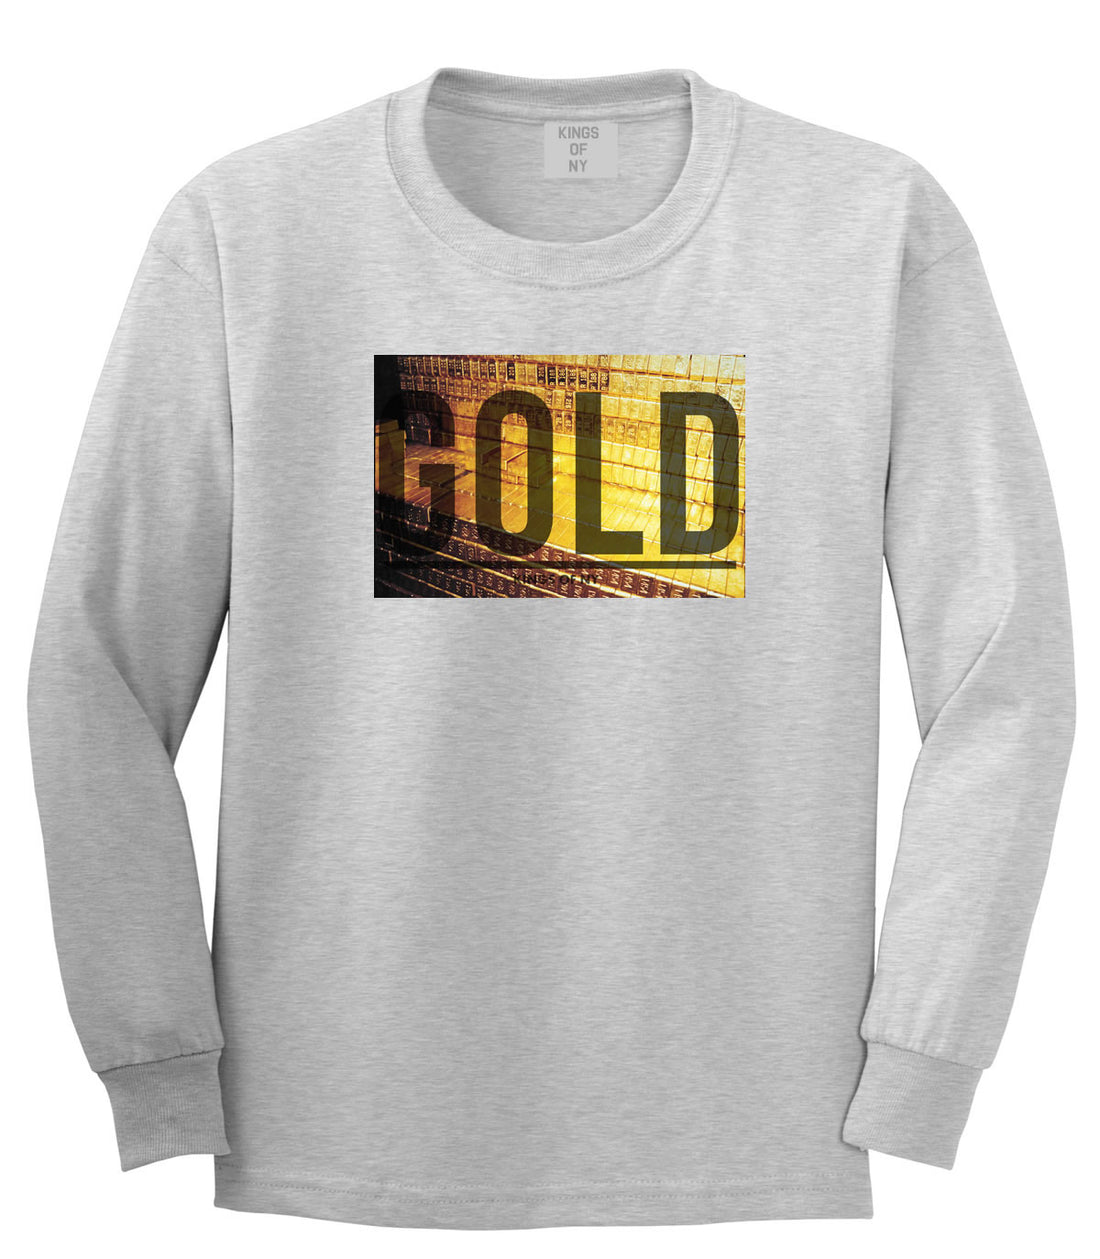 Gold Bricks Money Luxury Bank Cash Long Sleeve Boys Kids T-Shirt In Grey by Kings Of NY